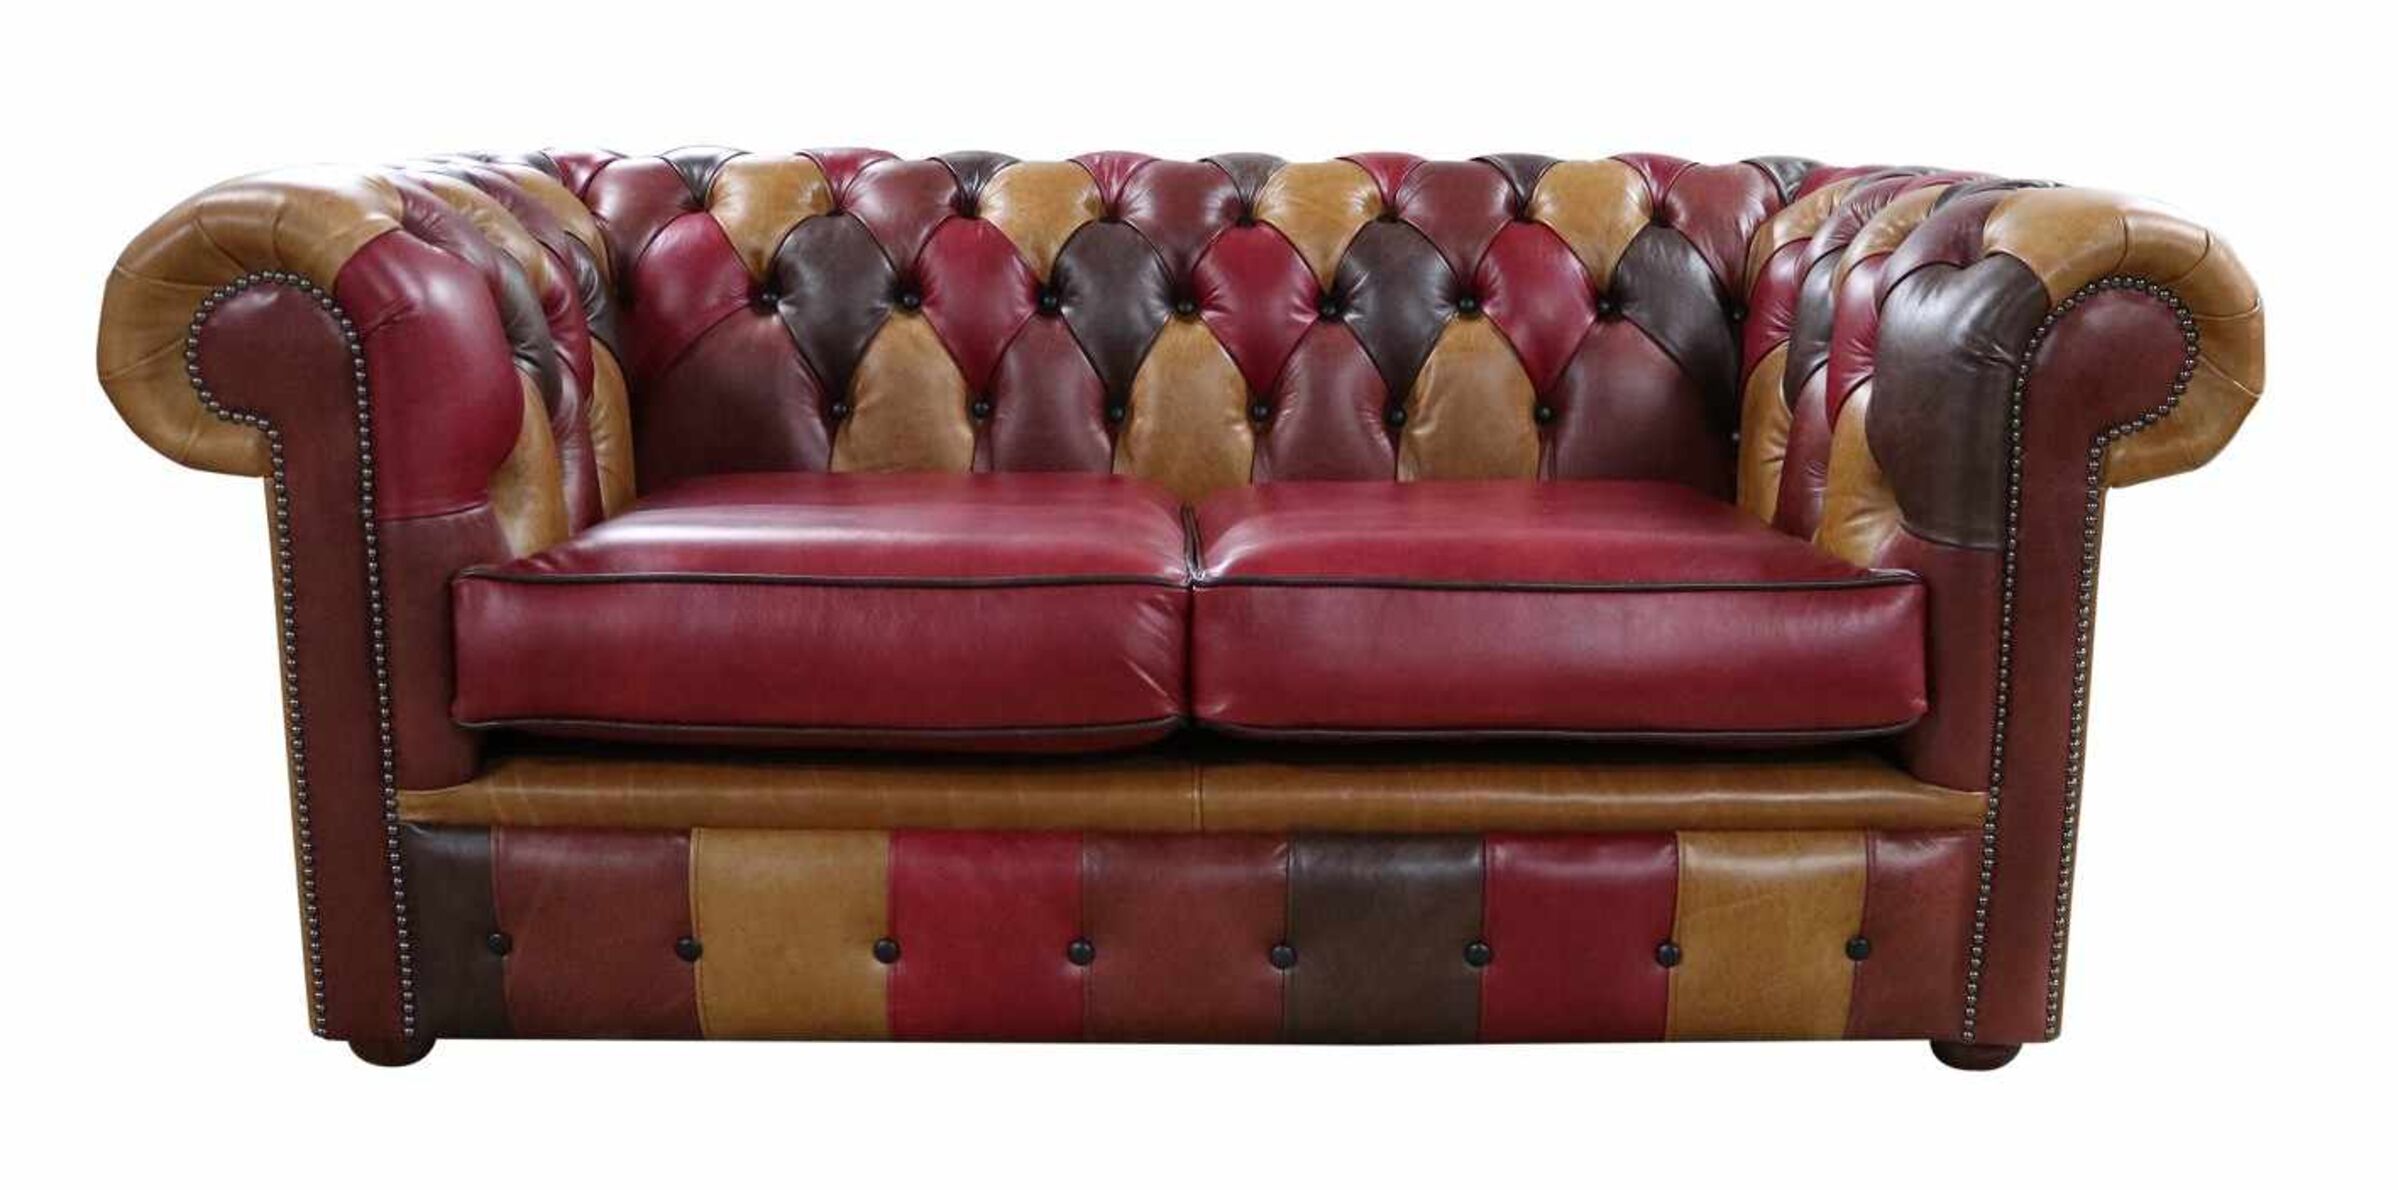 patchwork leather sofa uk